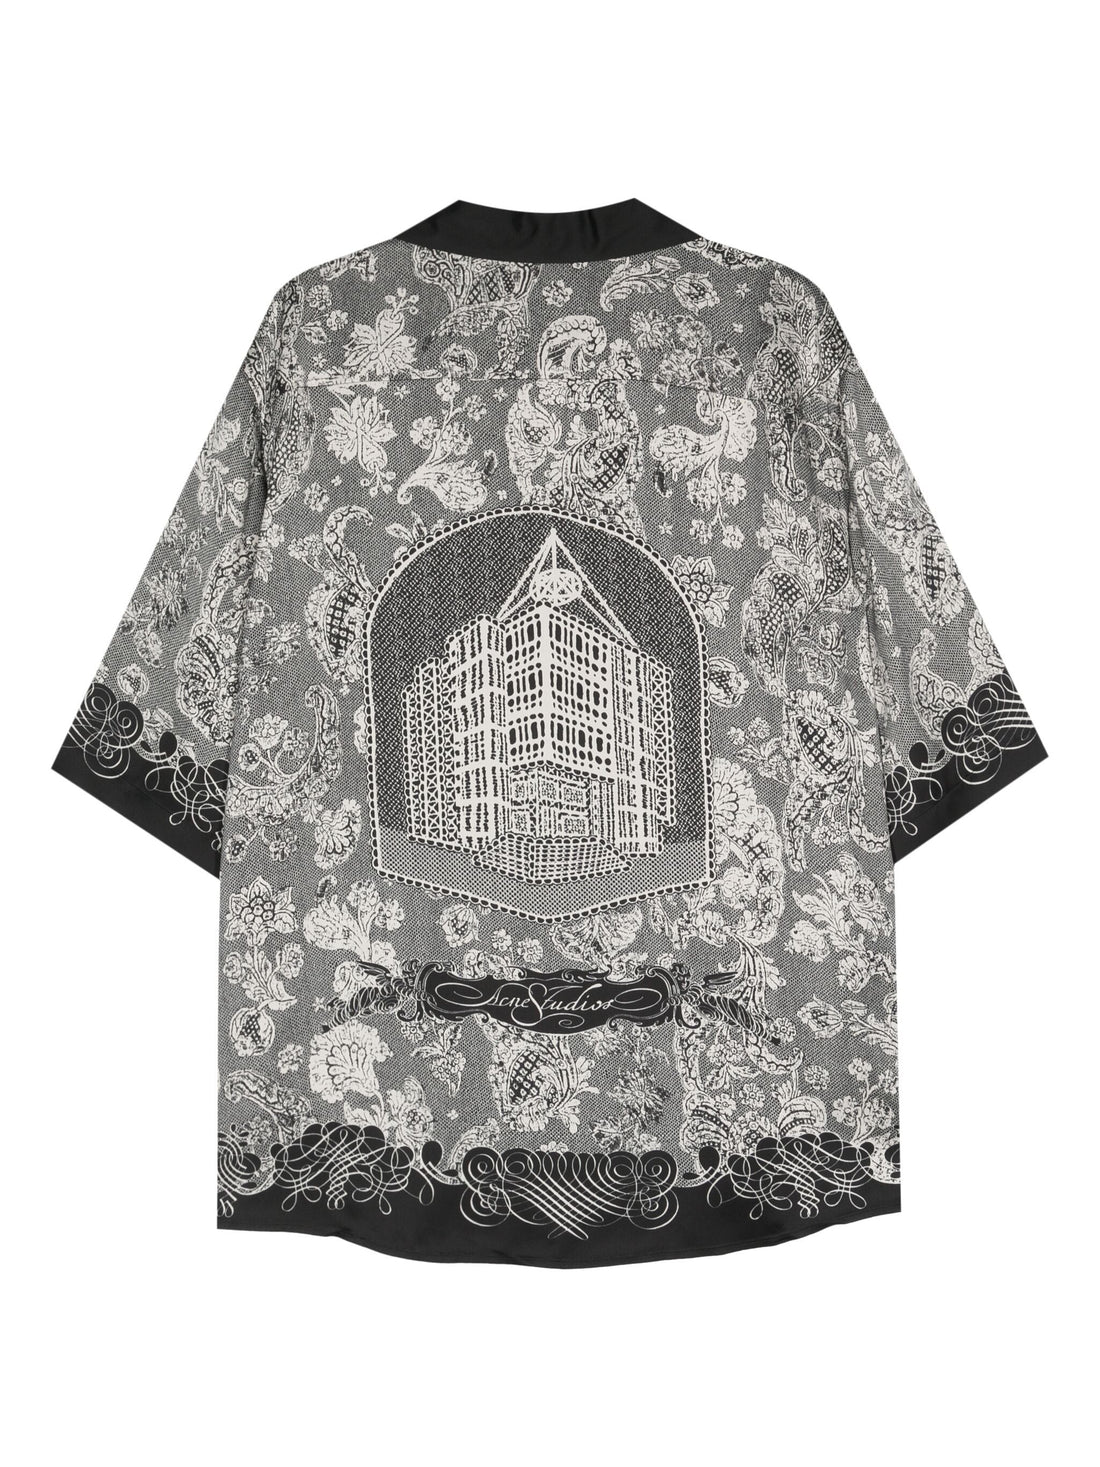 Acne Studios floral-print bowling shirt